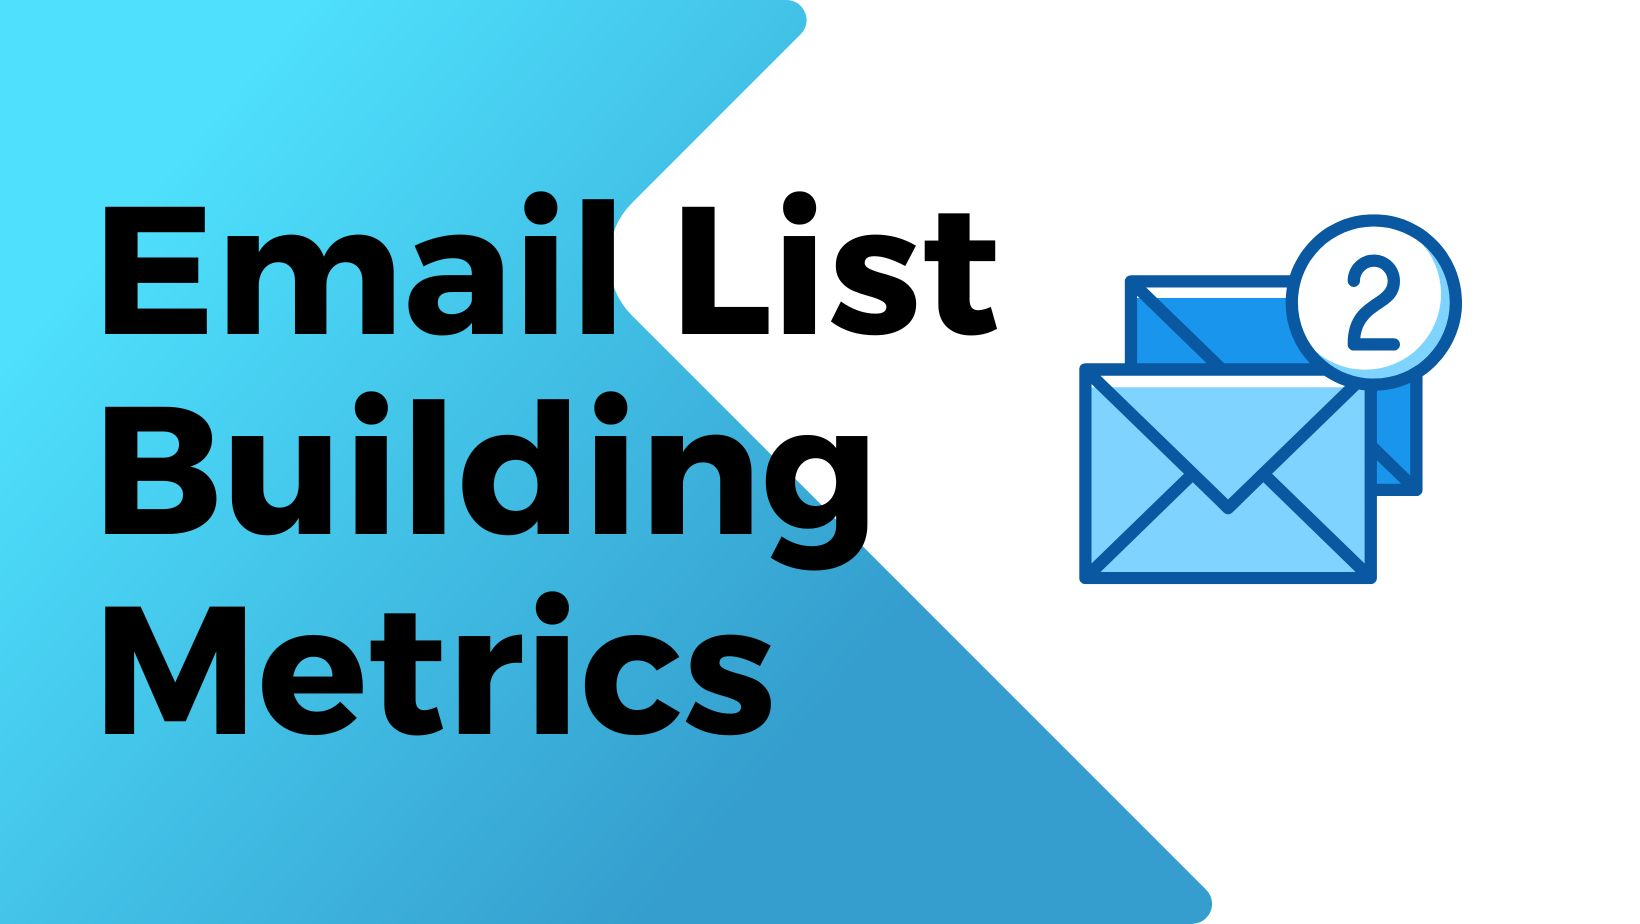 Email List Building Metrics